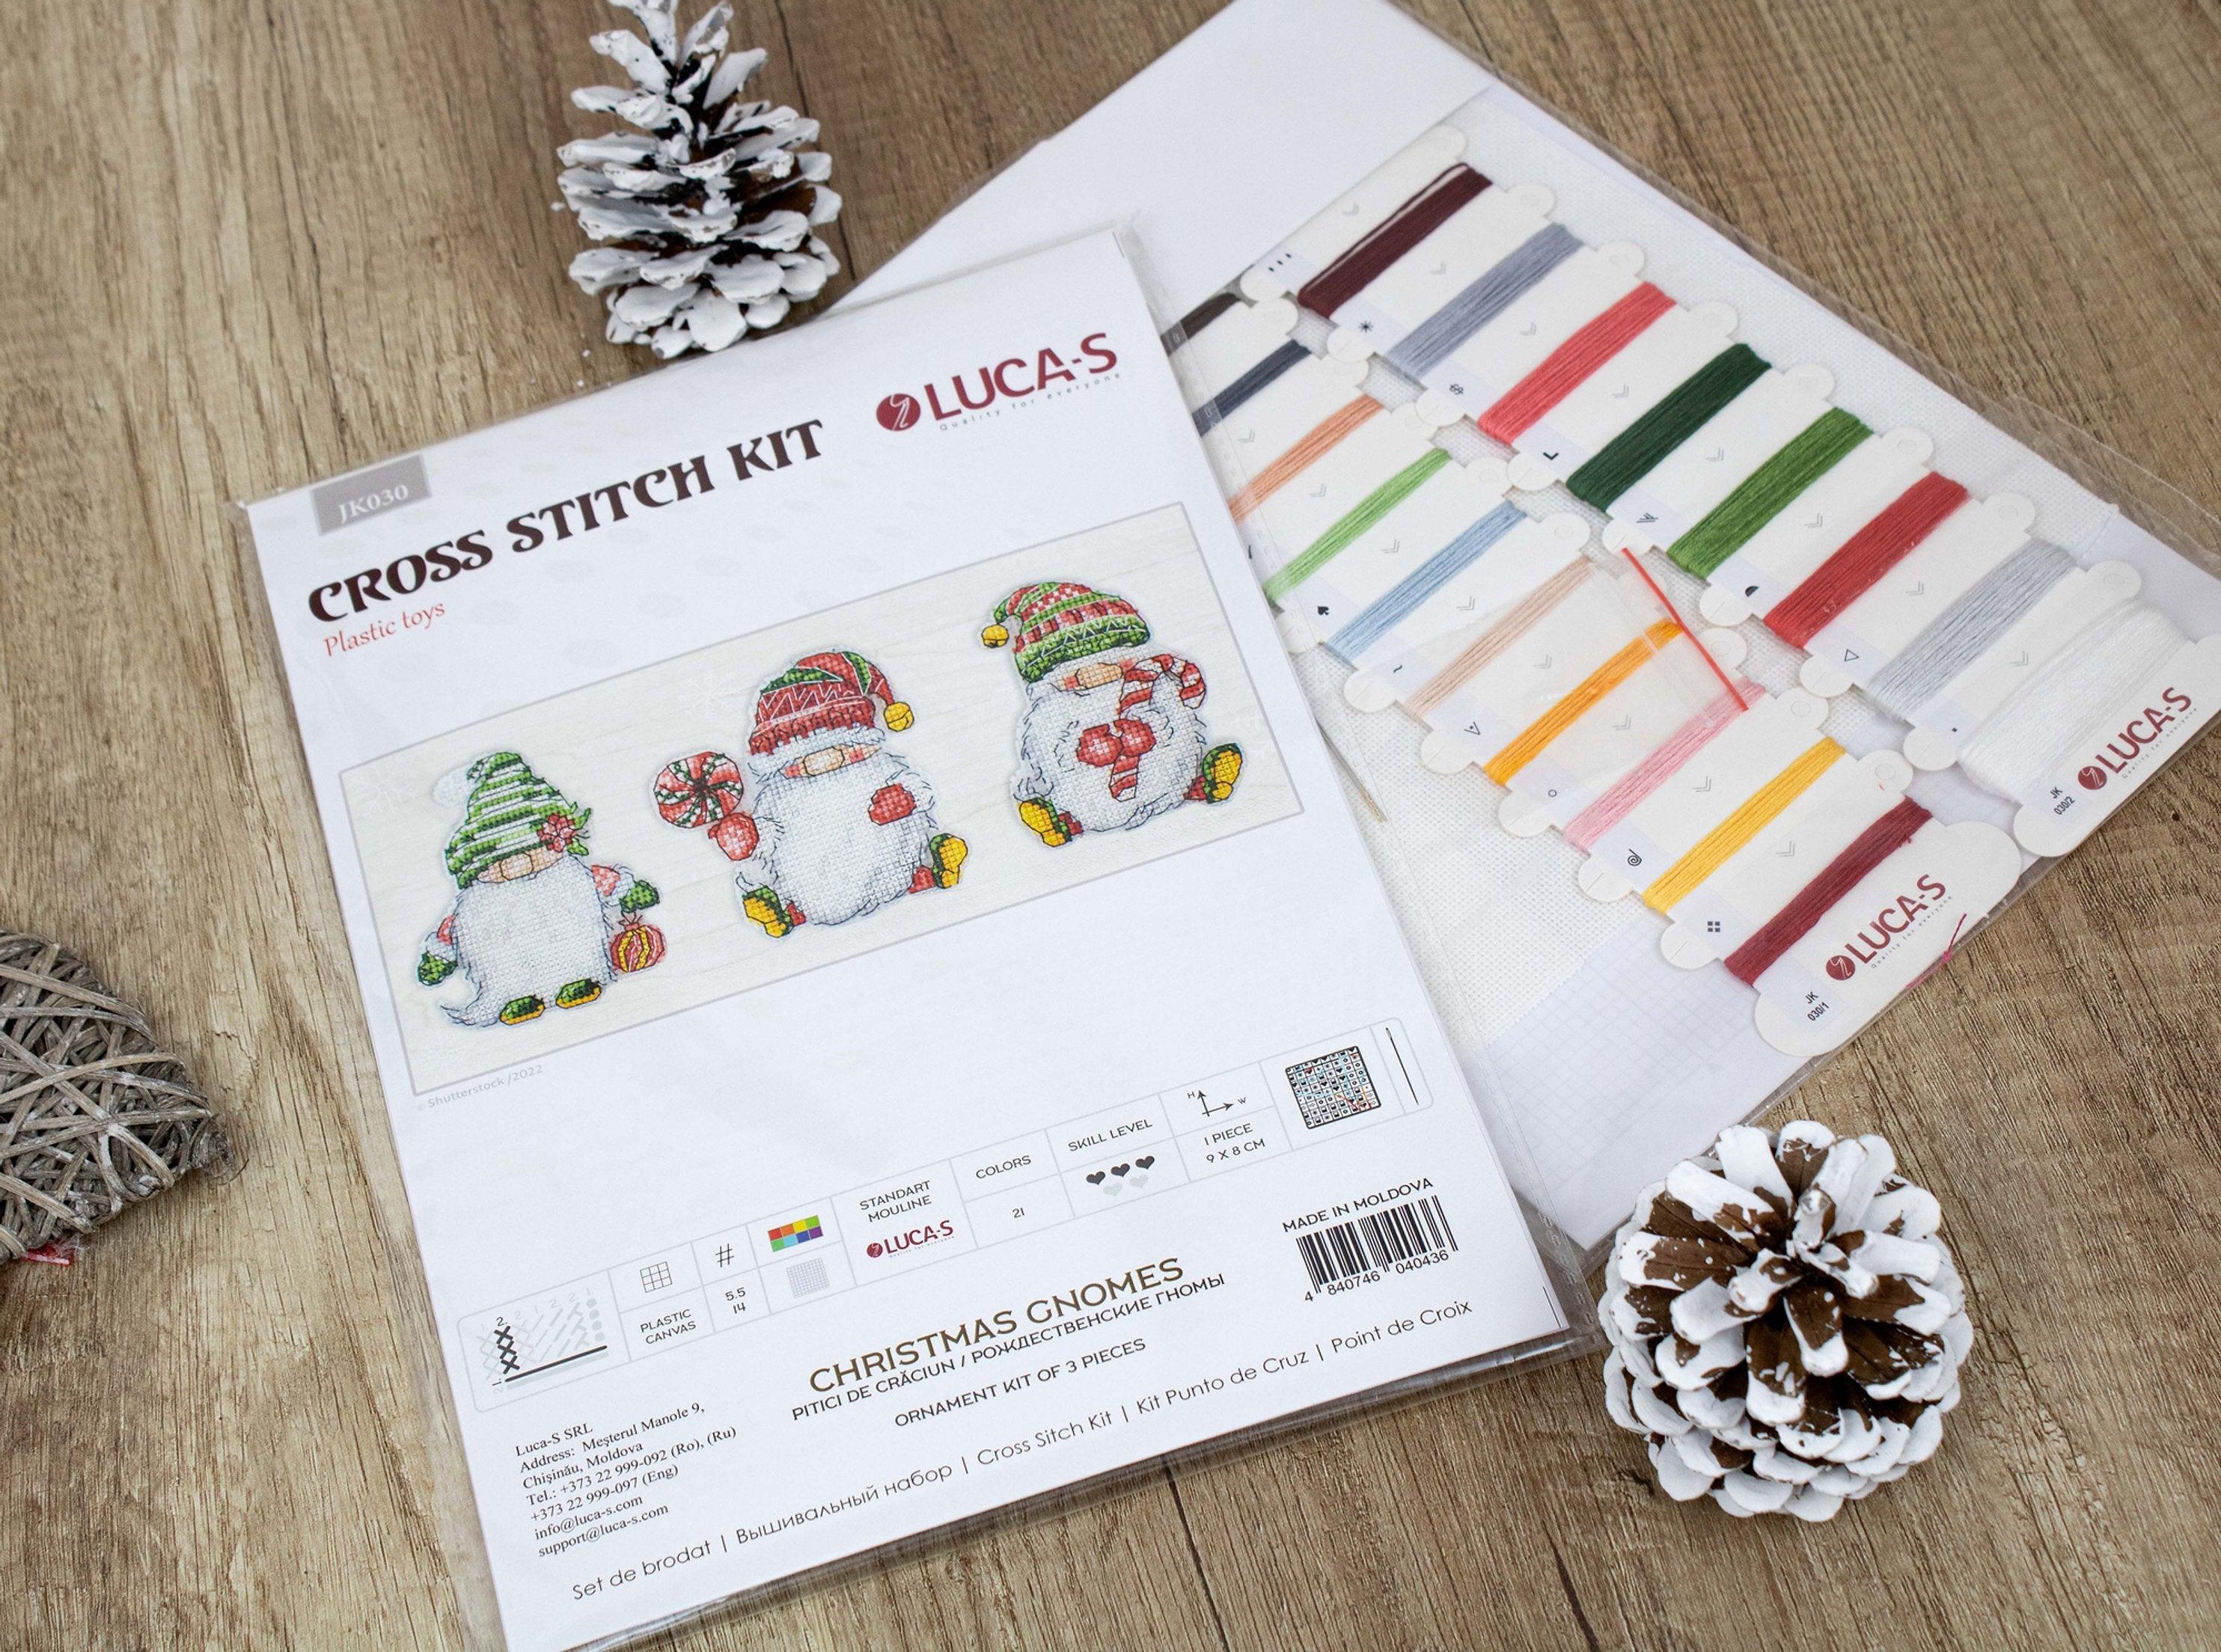 Toys Cross Stitch Kit Luca-S - Christmas Gnomes JK030 - Luca-S